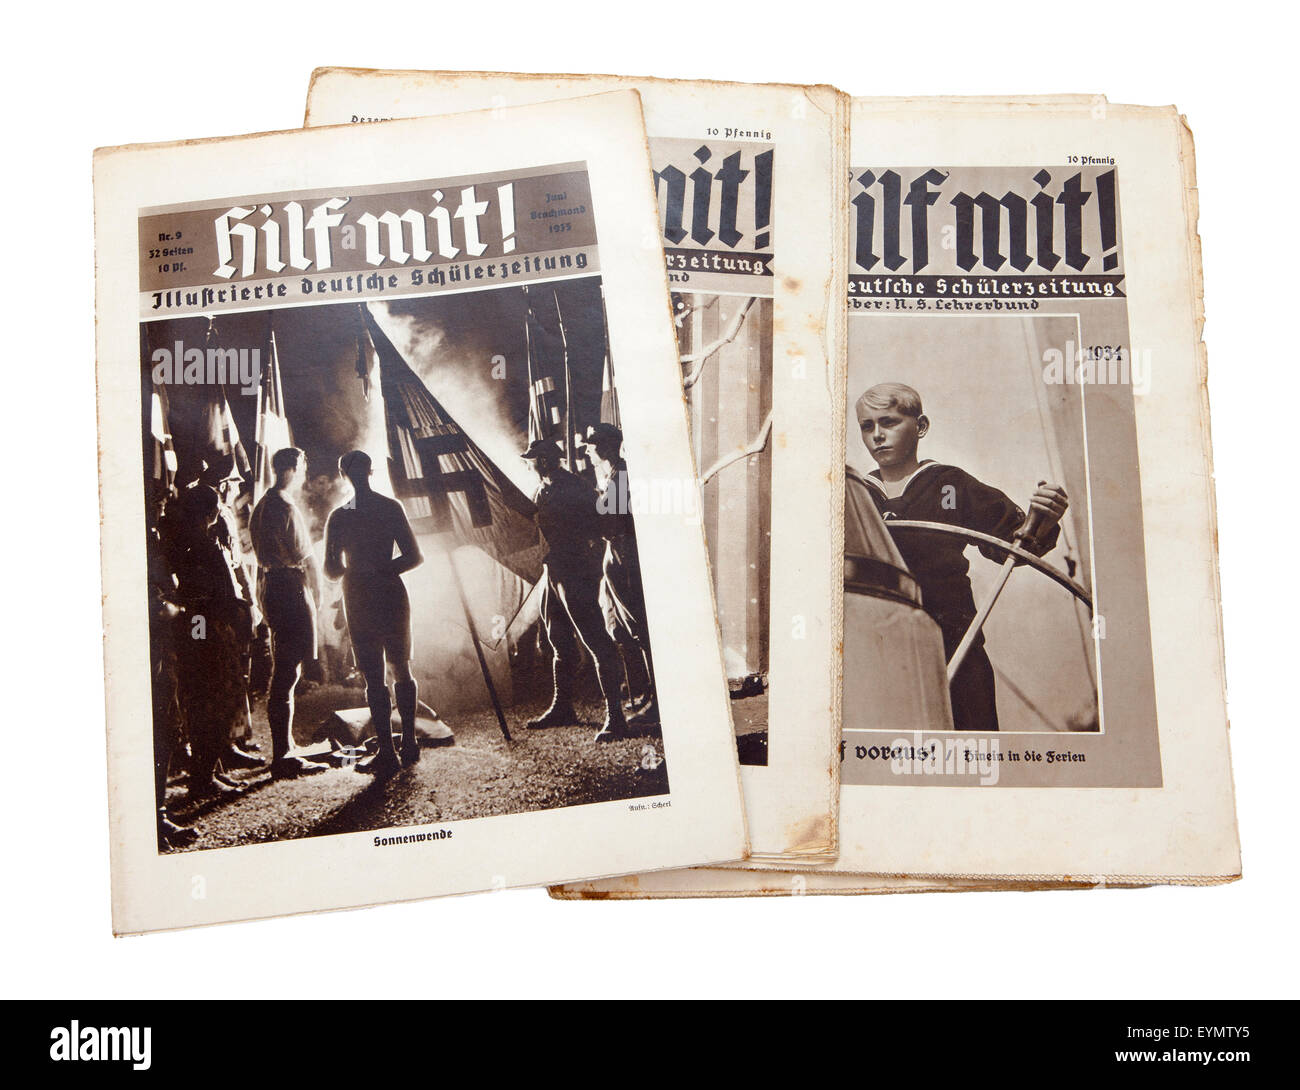 Nazi-German Propaganda for children, pupil magazine 'Help' or 'Hilf mit', 1934, Stock Photo